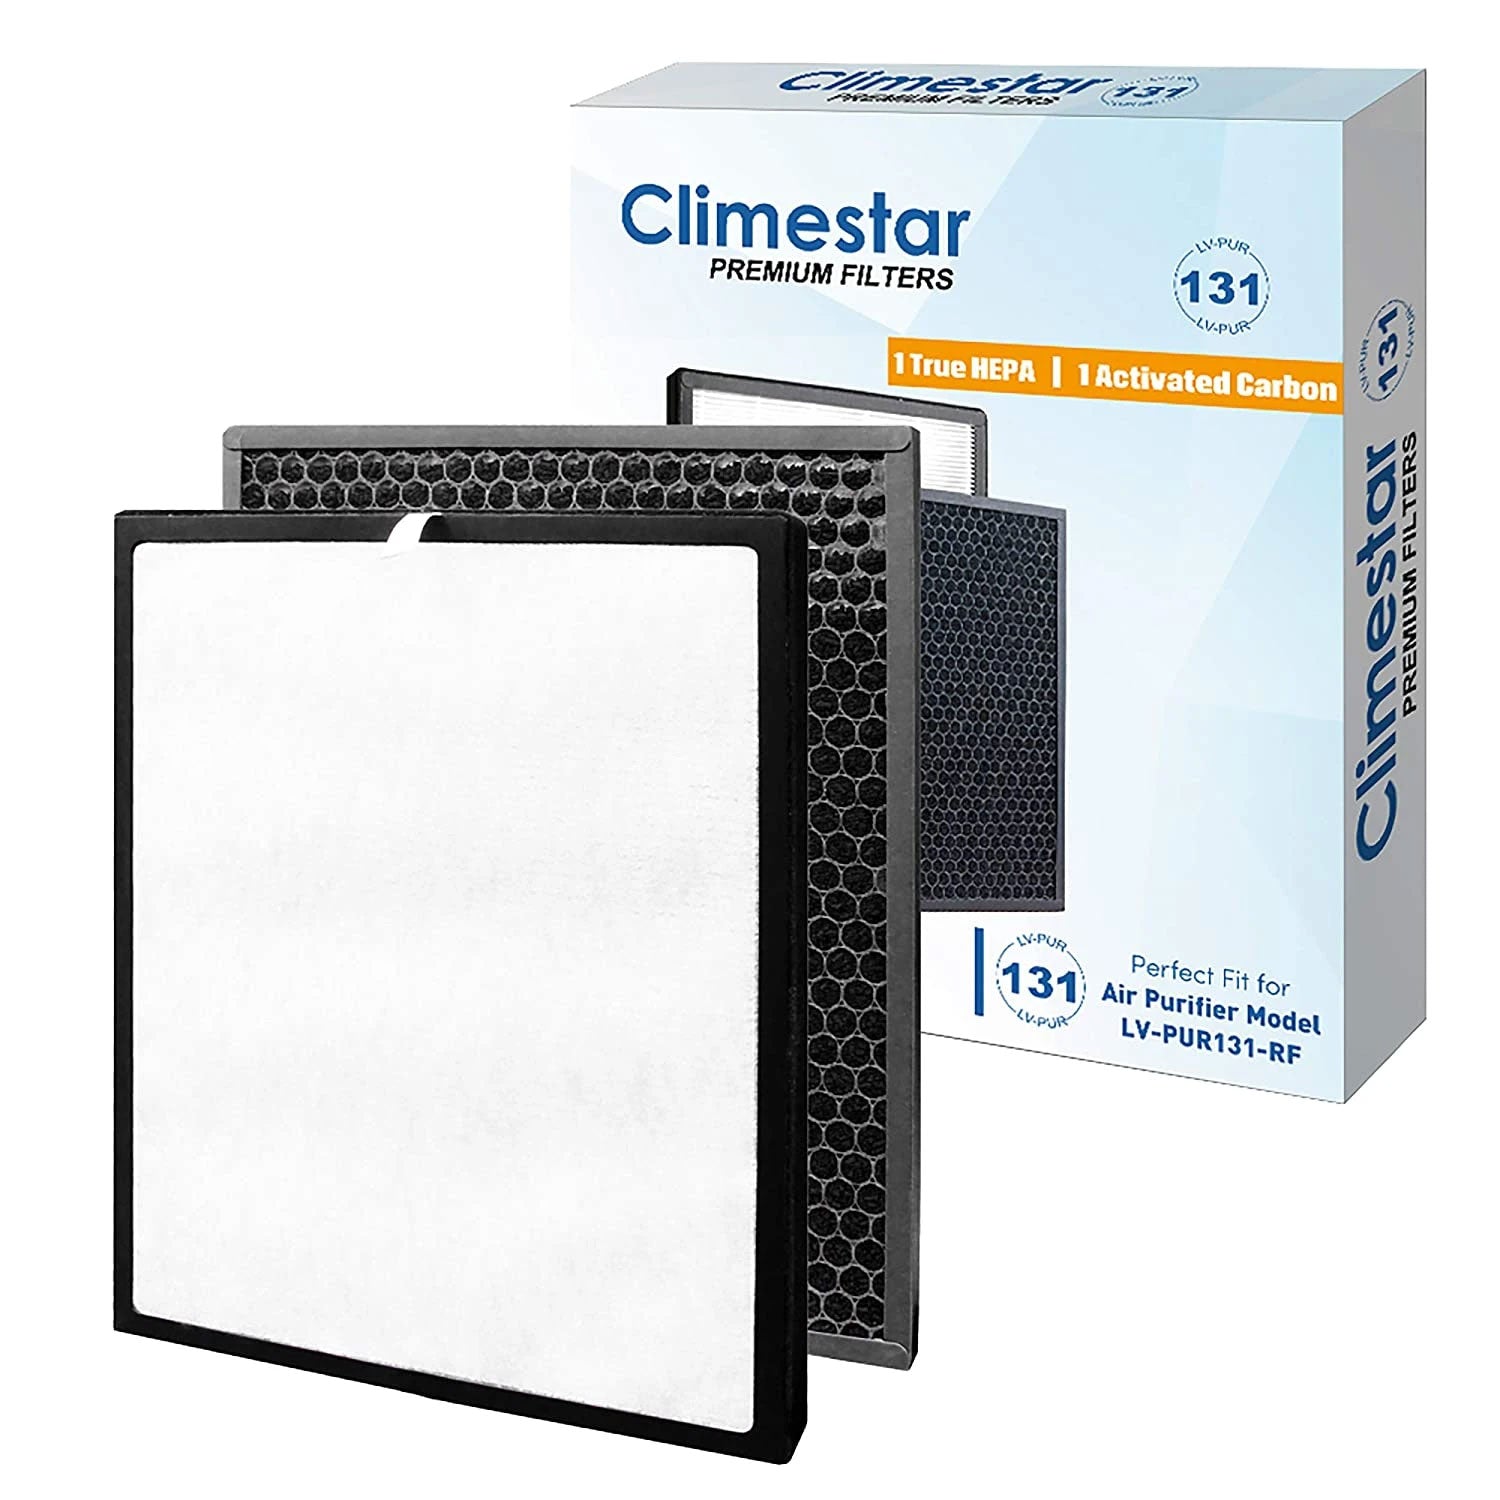 Climestar Filter for Levoit Air Purifier LV-PUR131, Part LV-PUR131